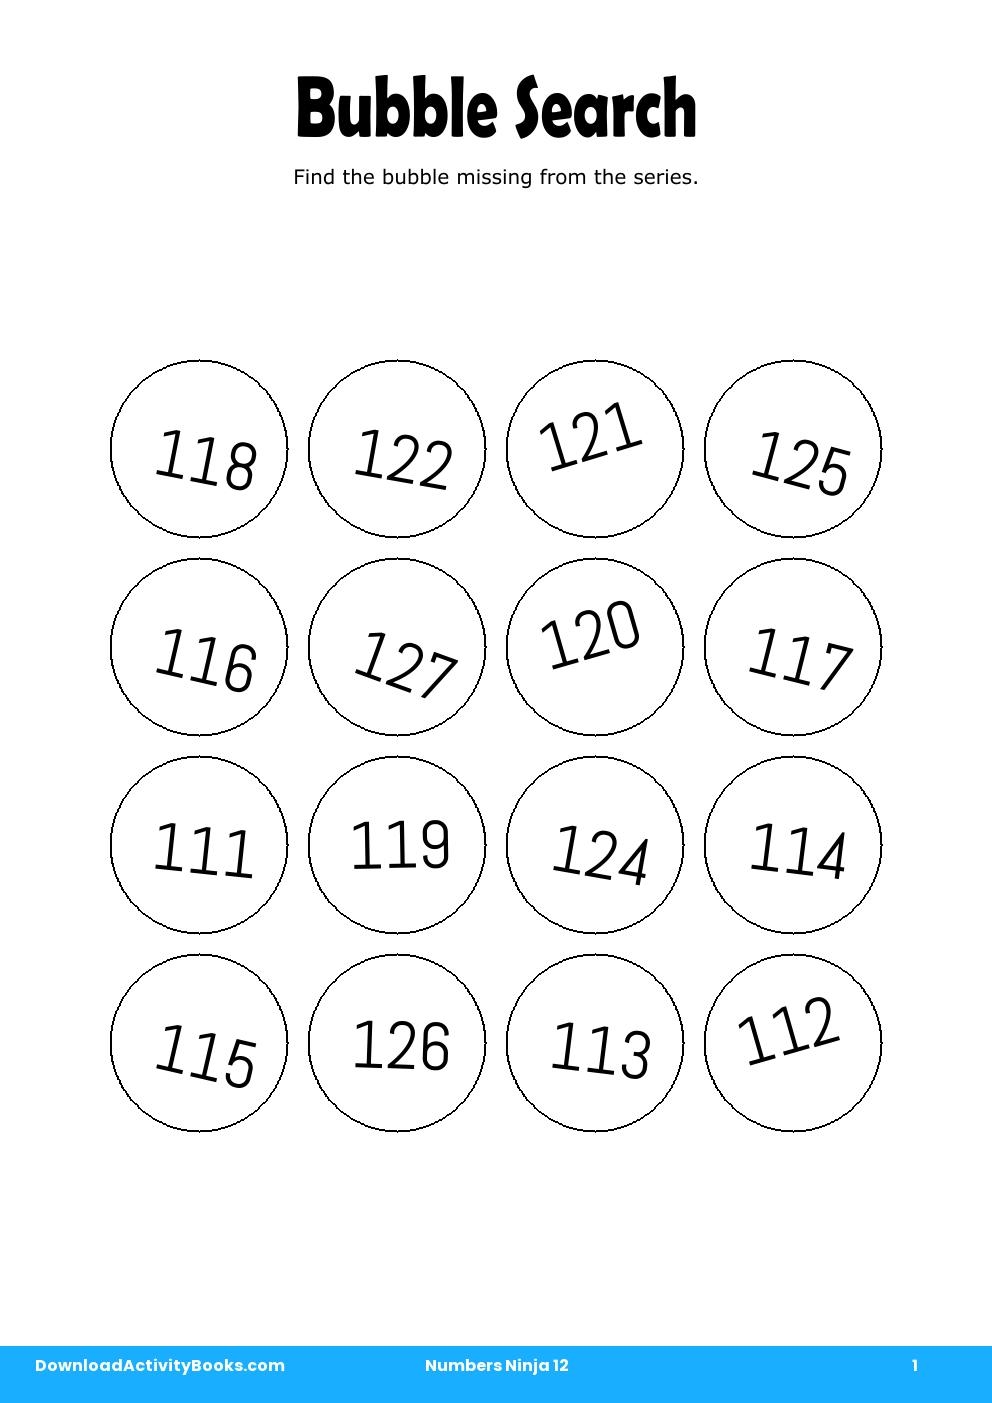 Bubble Search in Numbers Ninja 12